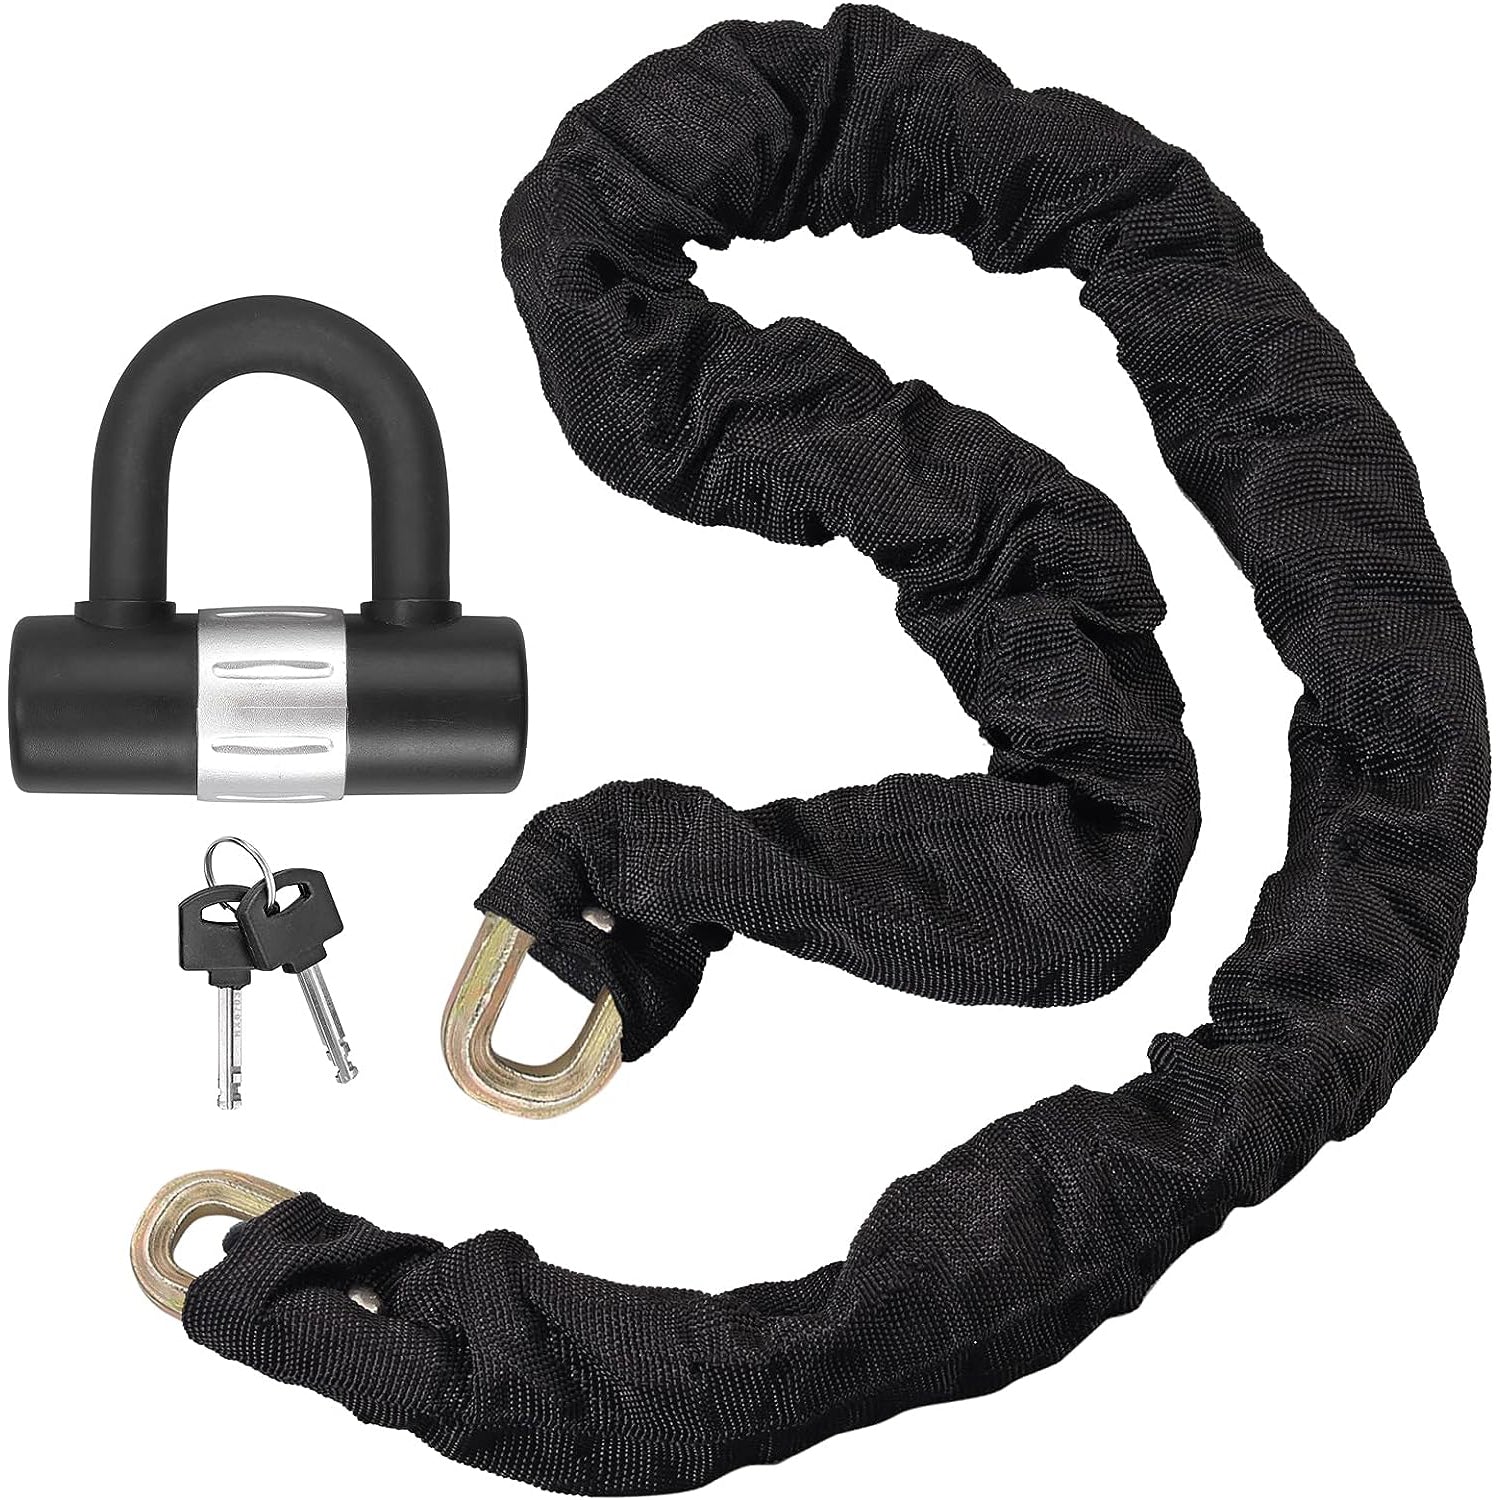 Motorcycle Chain Lock 4ft/120cm + U Lock